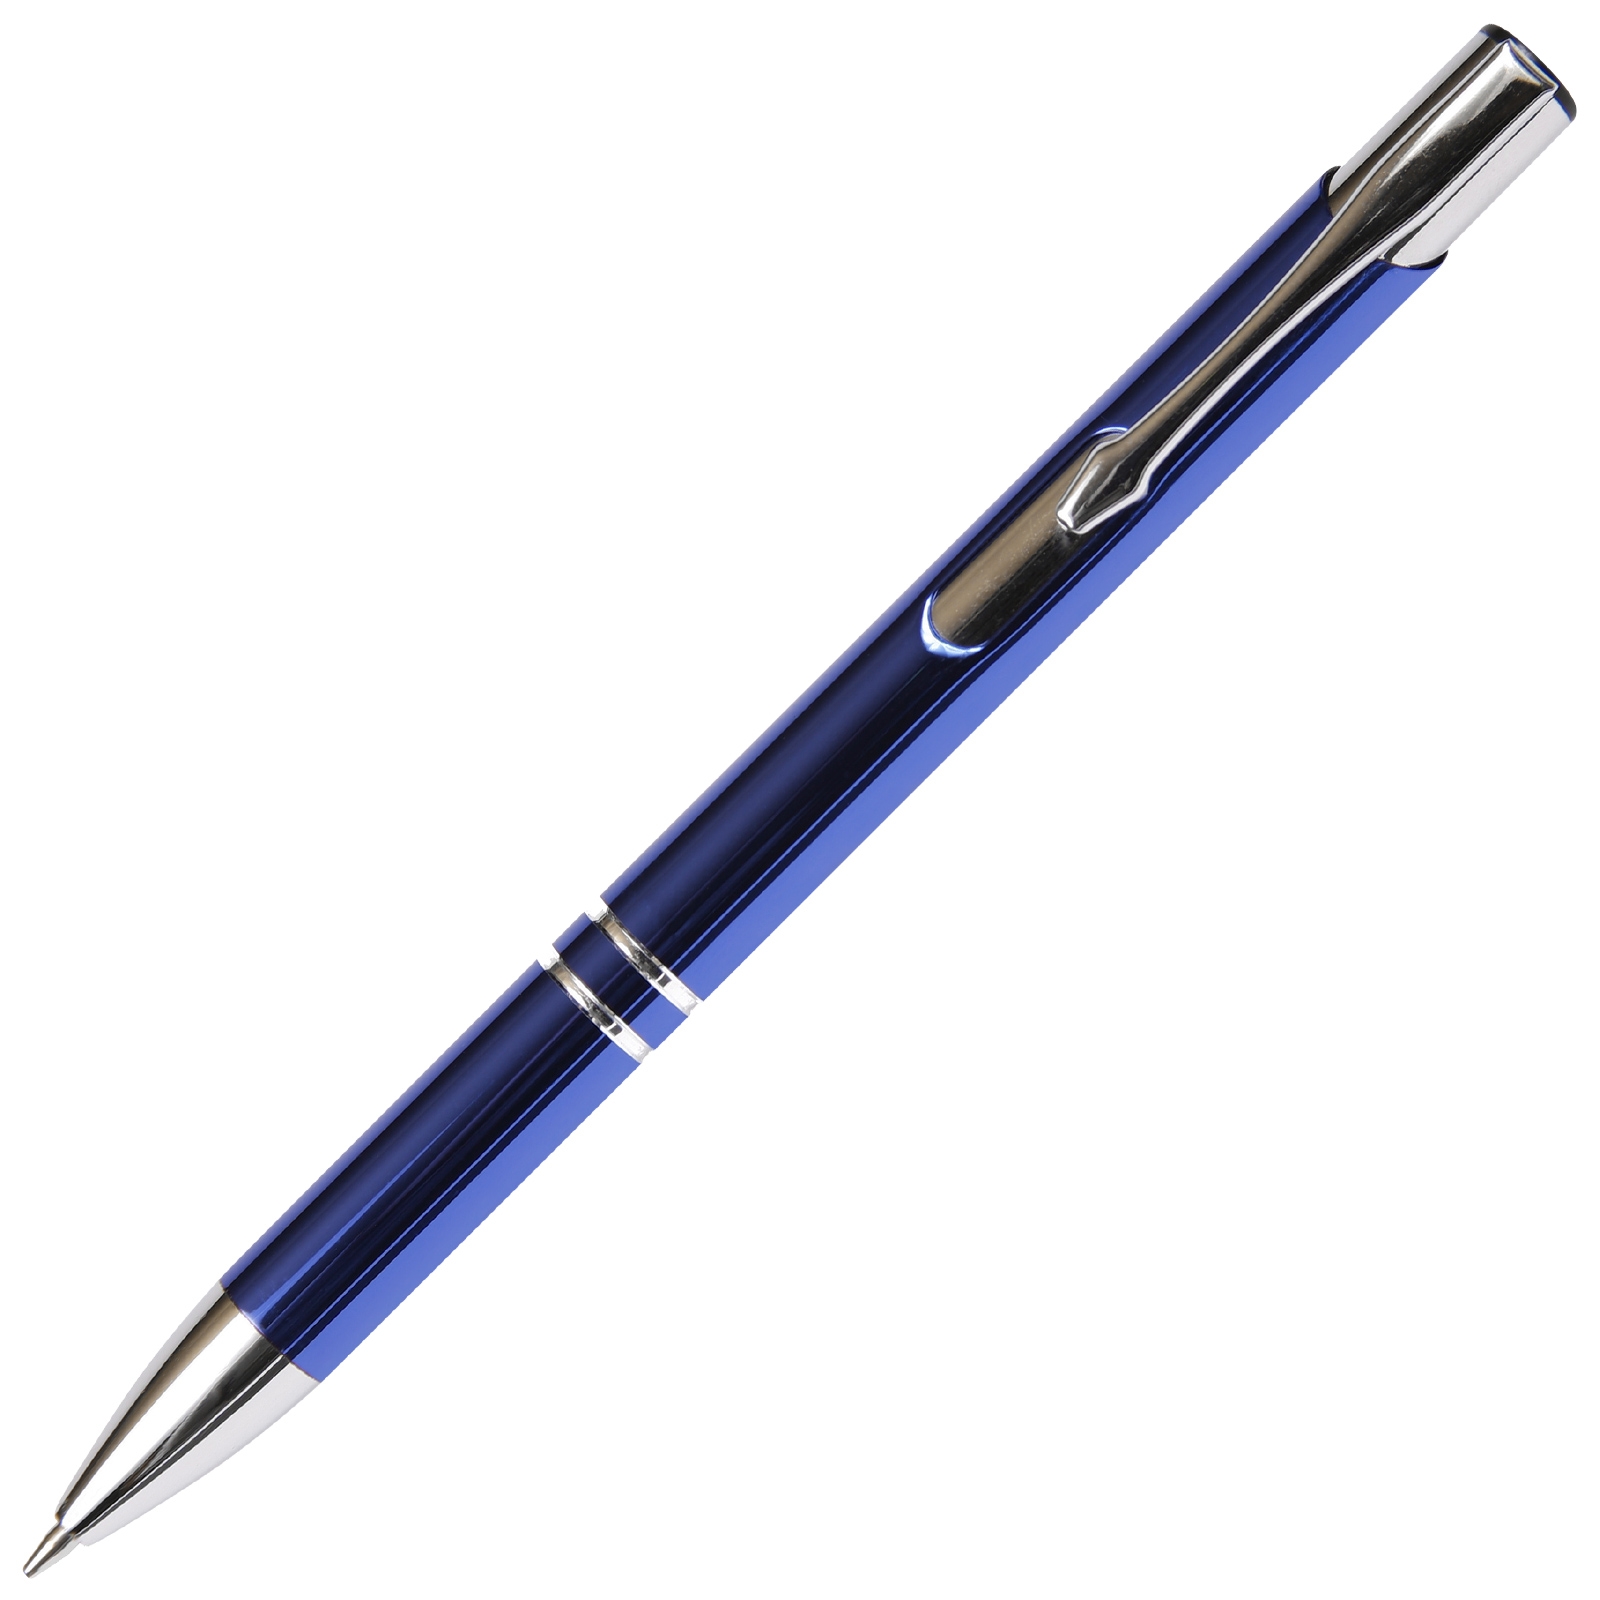 Budget Friendly JJ Mechanical Pencil - Blue with Standard 0.7mm Lead Refill By Lanier Pens